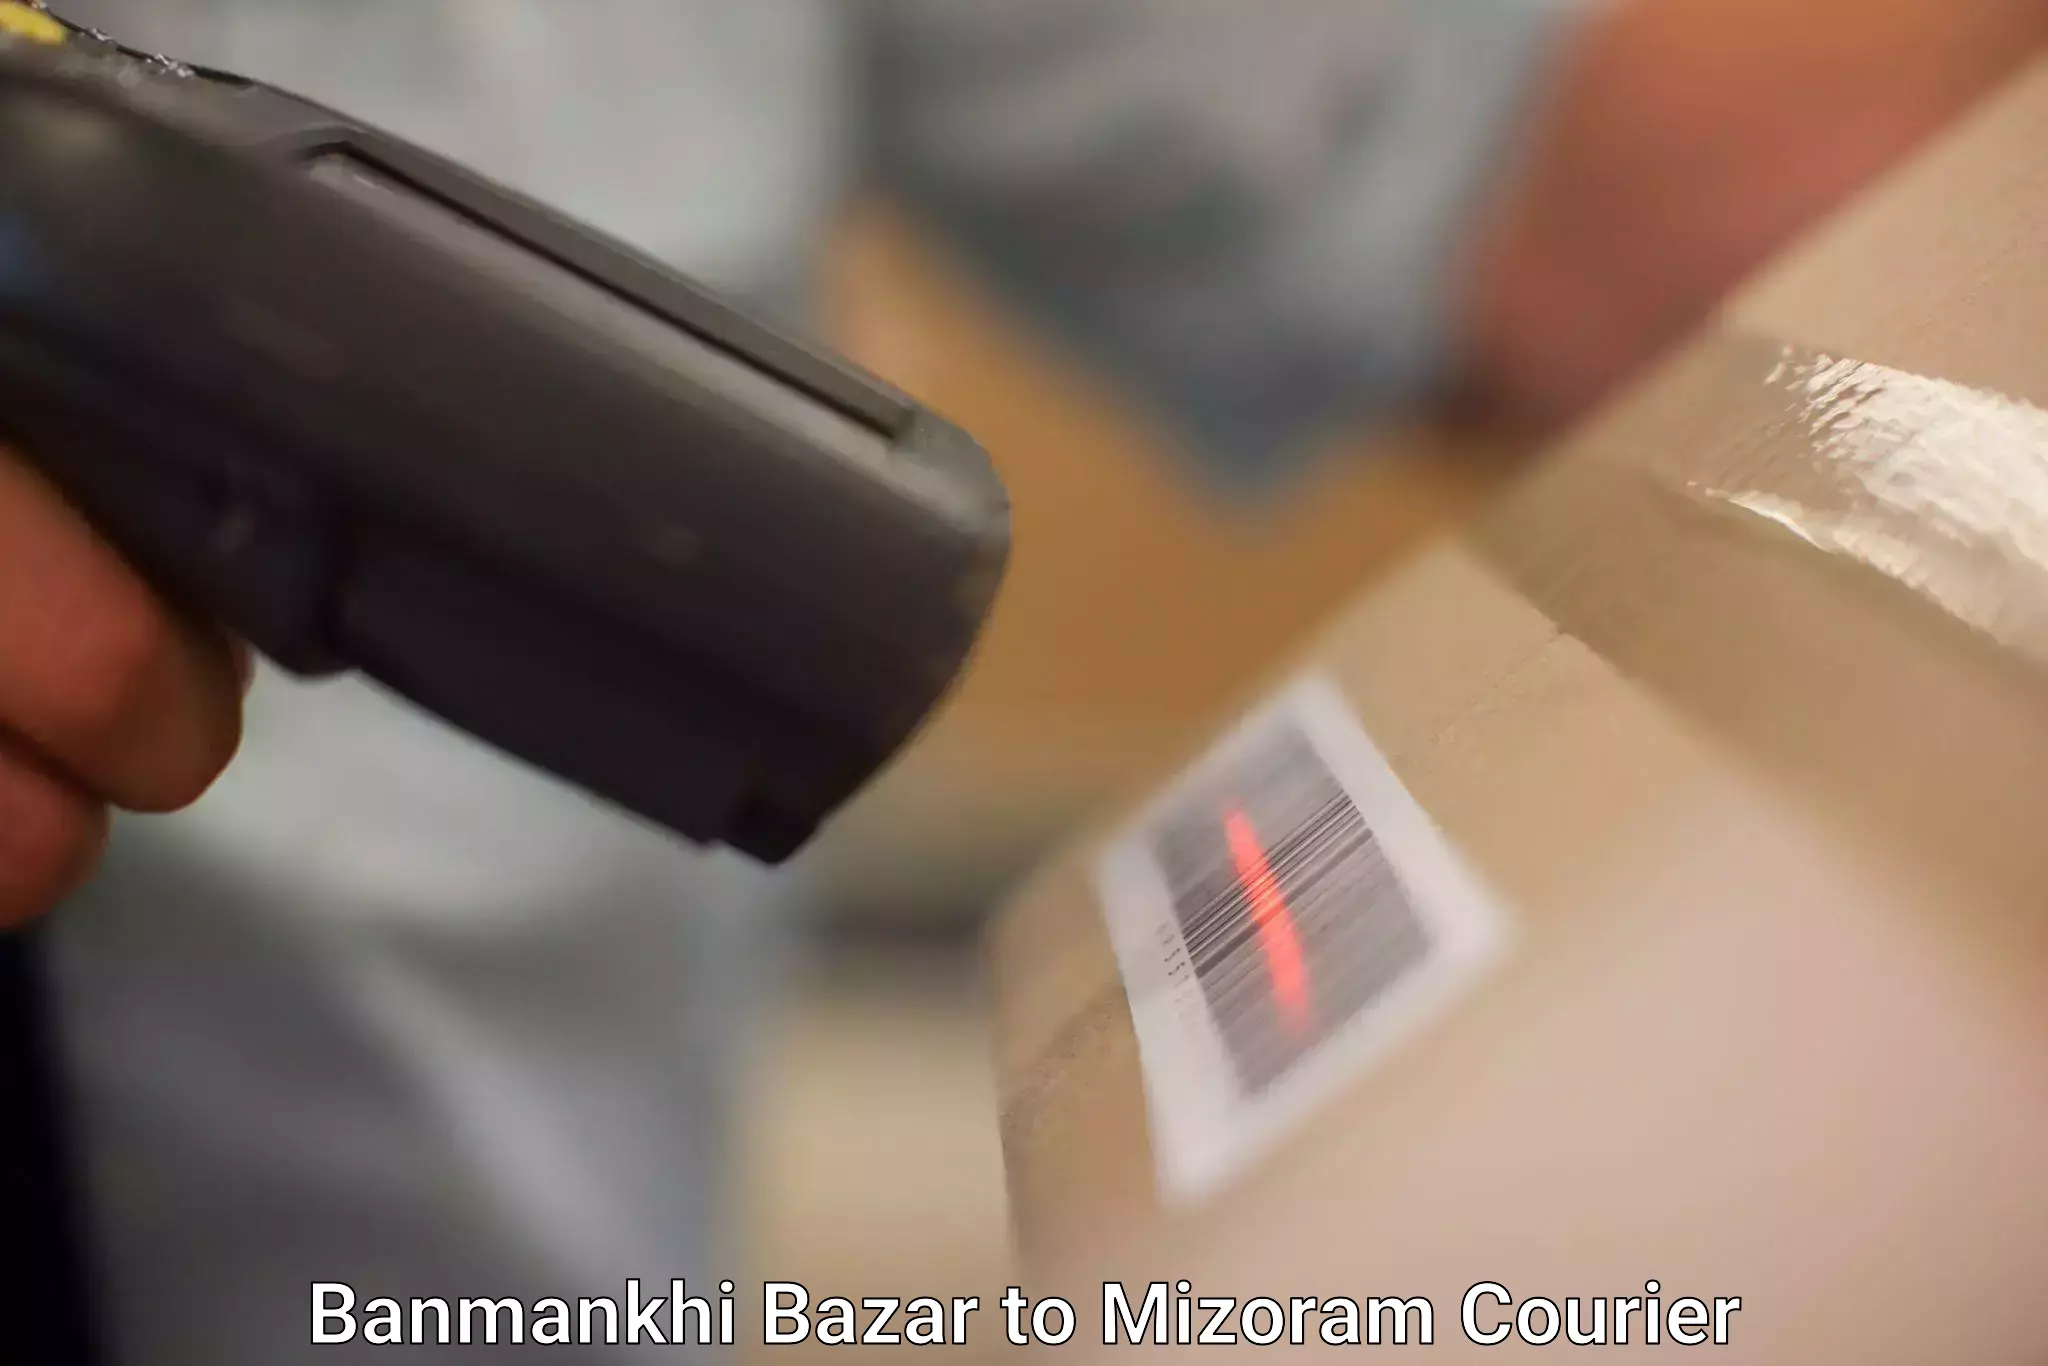 Courier service innovation Banmankhi Bazar to Aizawl